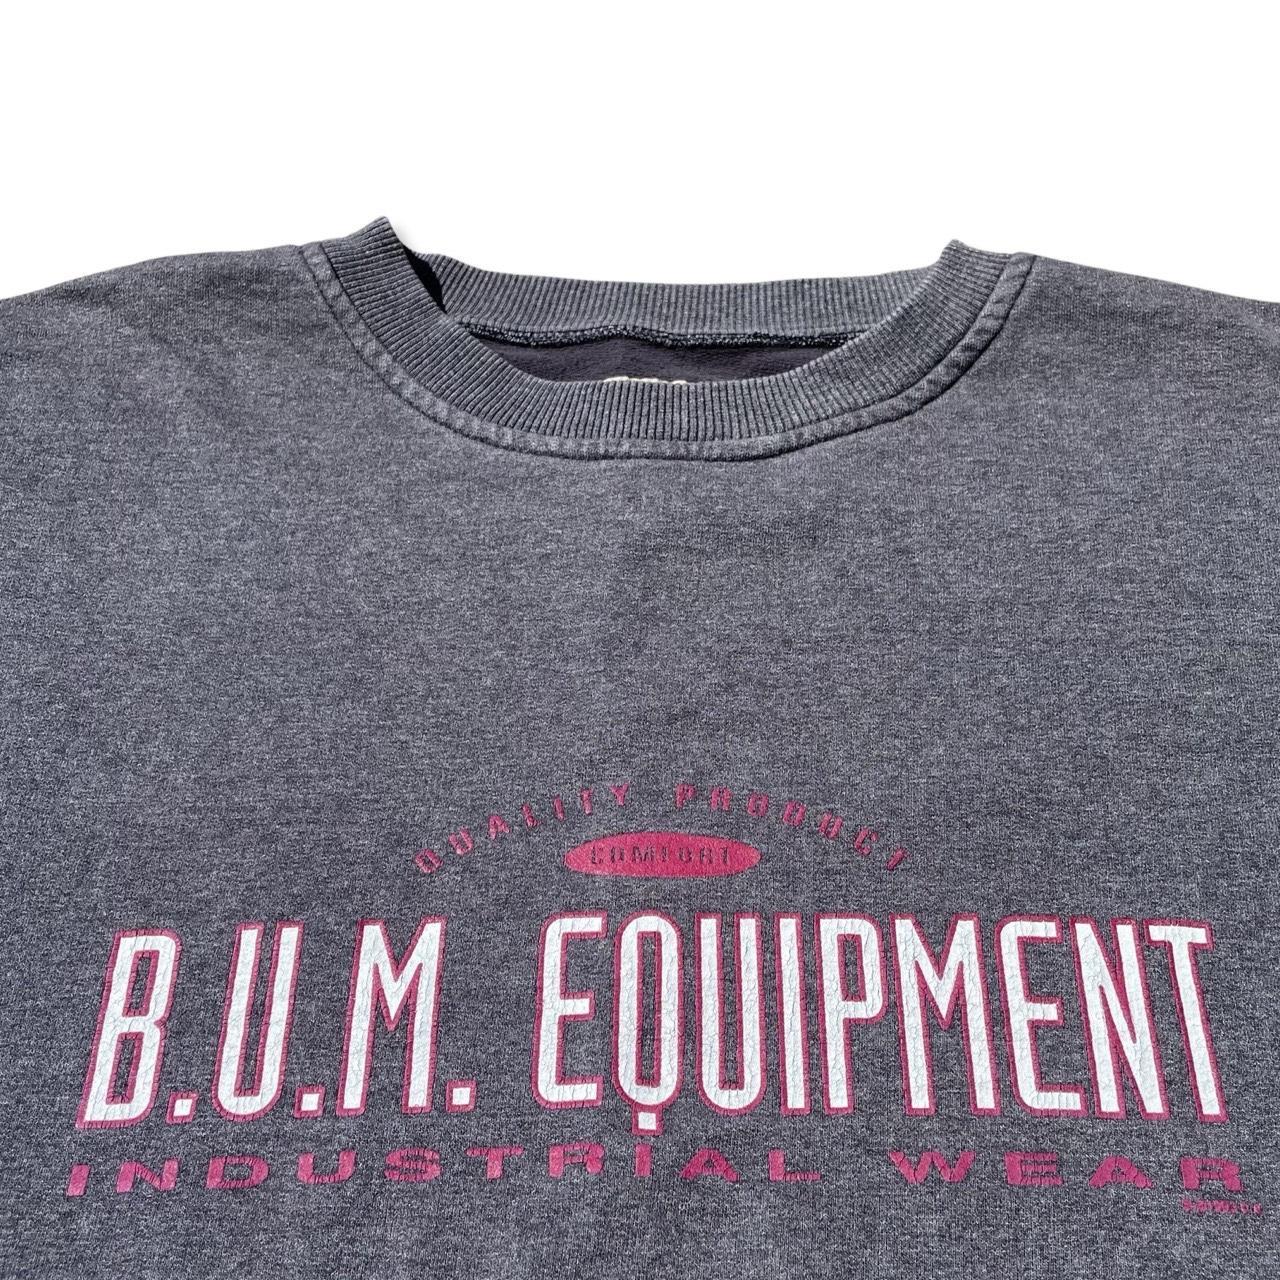 Product Image 1 - BUM Equipment Essential Crewneck Sweatshirt

Vintage